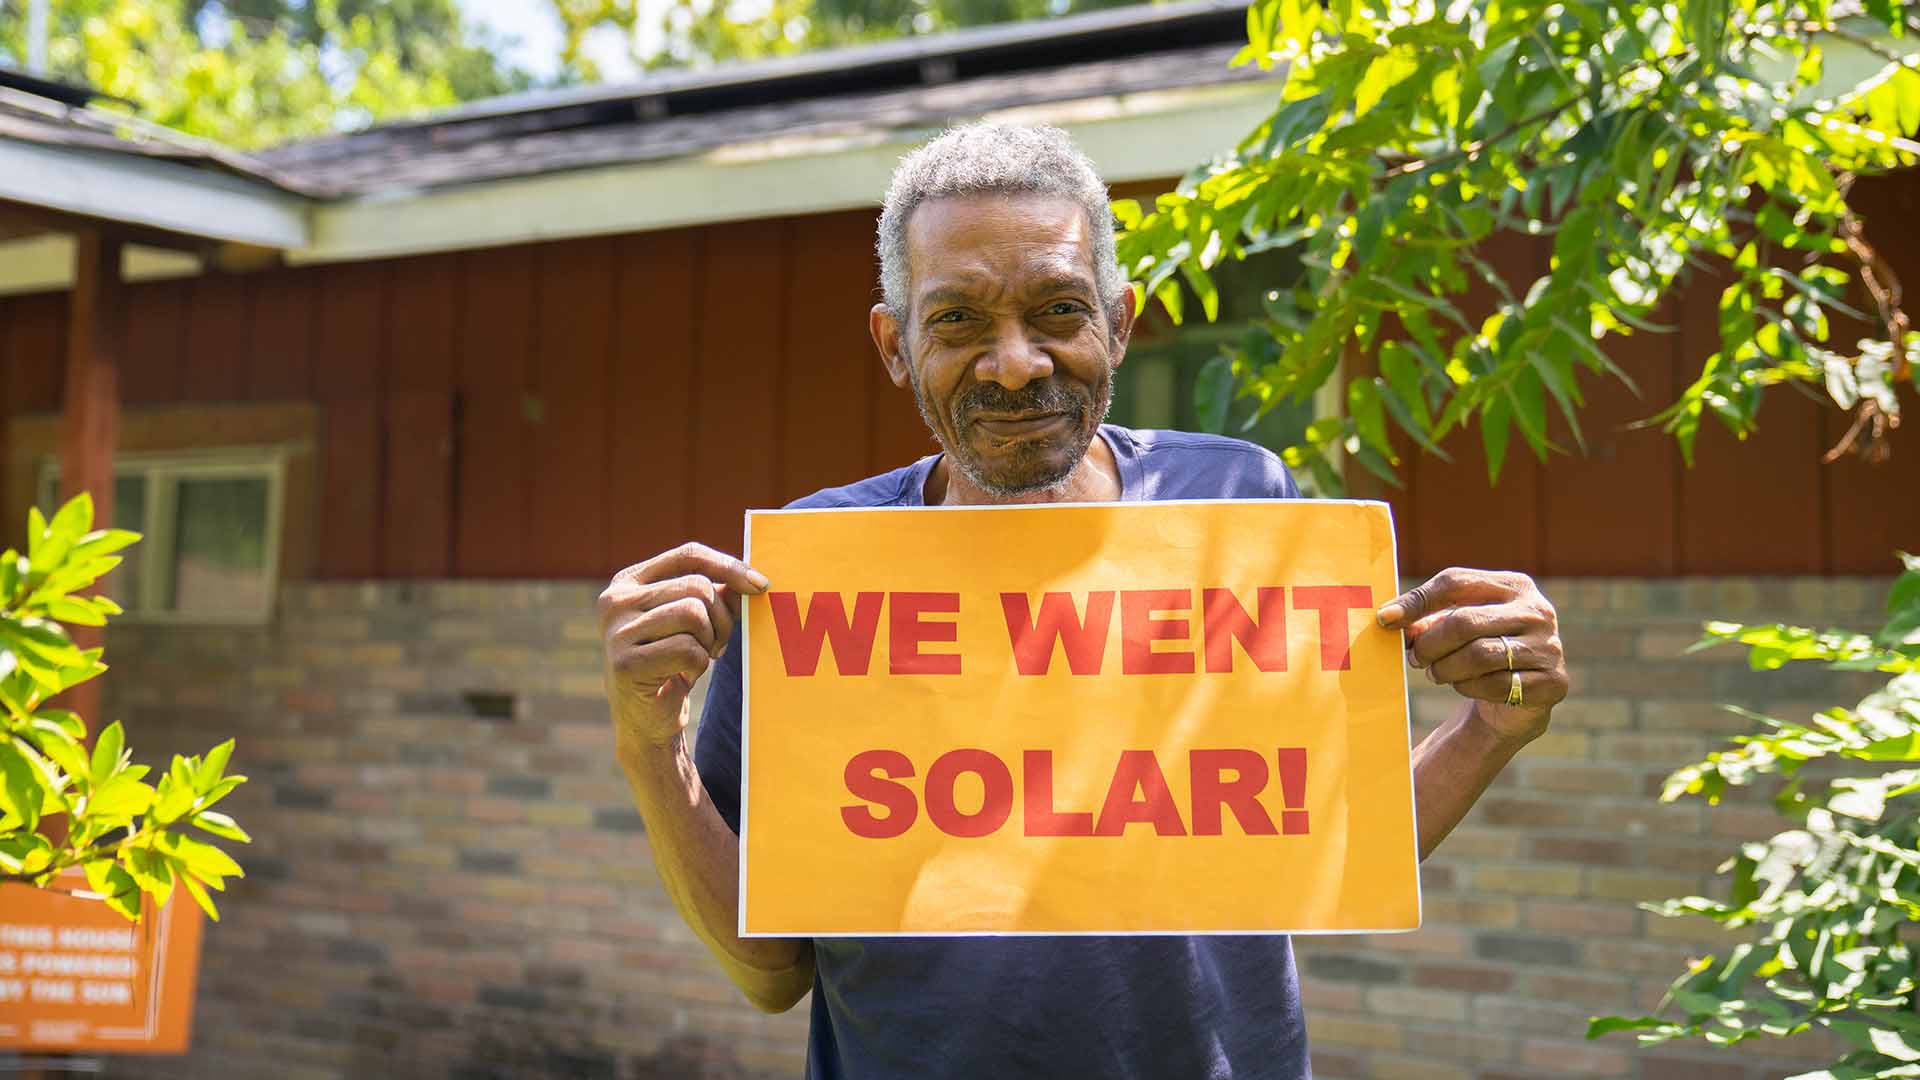 Man holding "We went solar" sign.